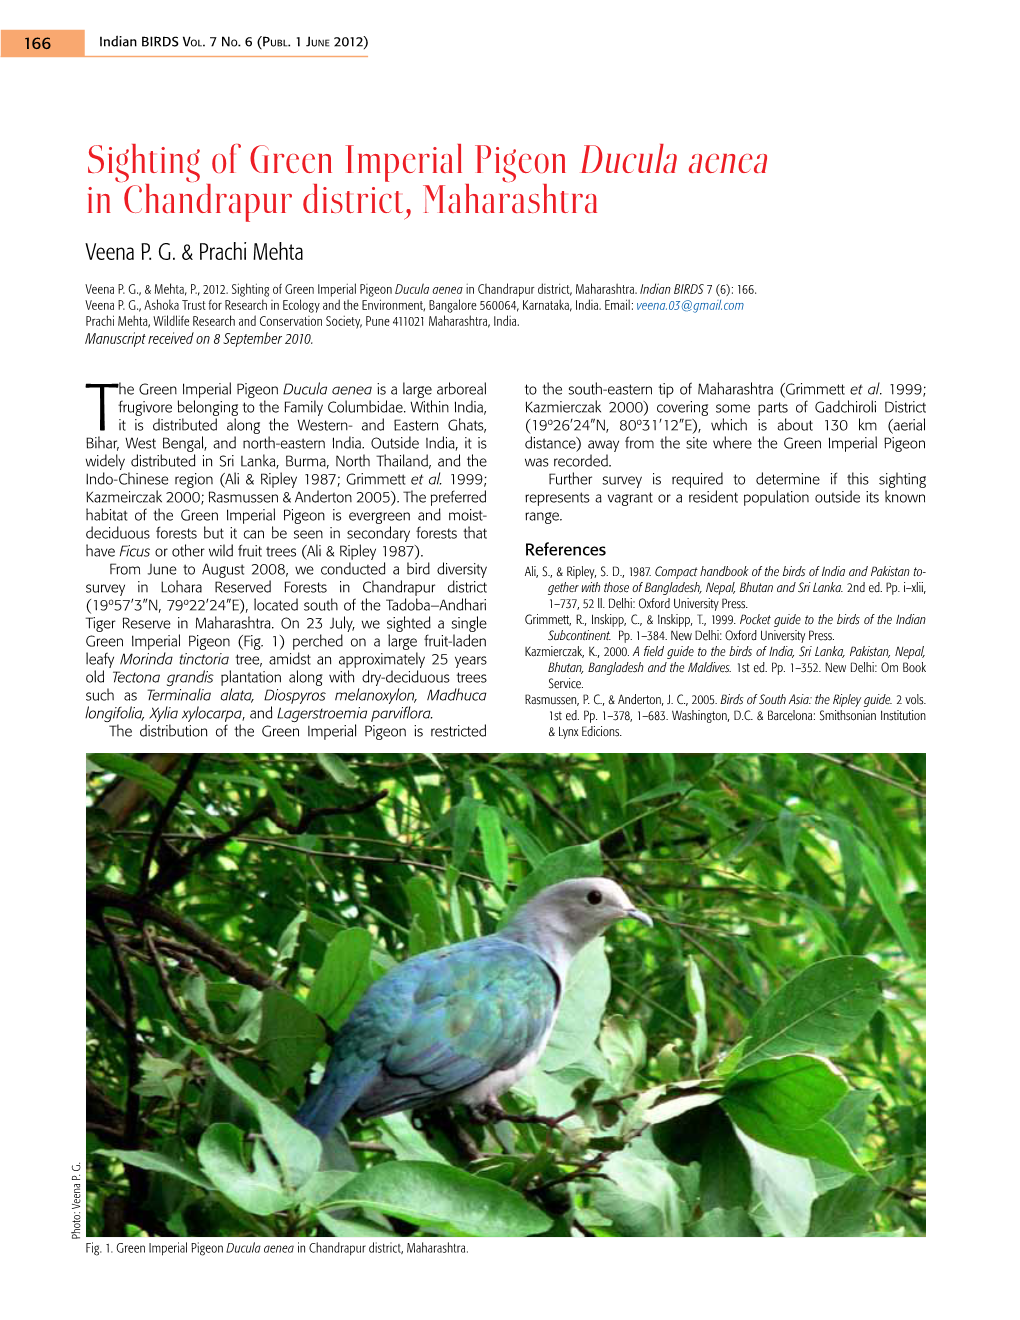 Sighting of Green Imperial Pigeon Ducula Aenea in Chandrapur District, Maharashtra Veena P